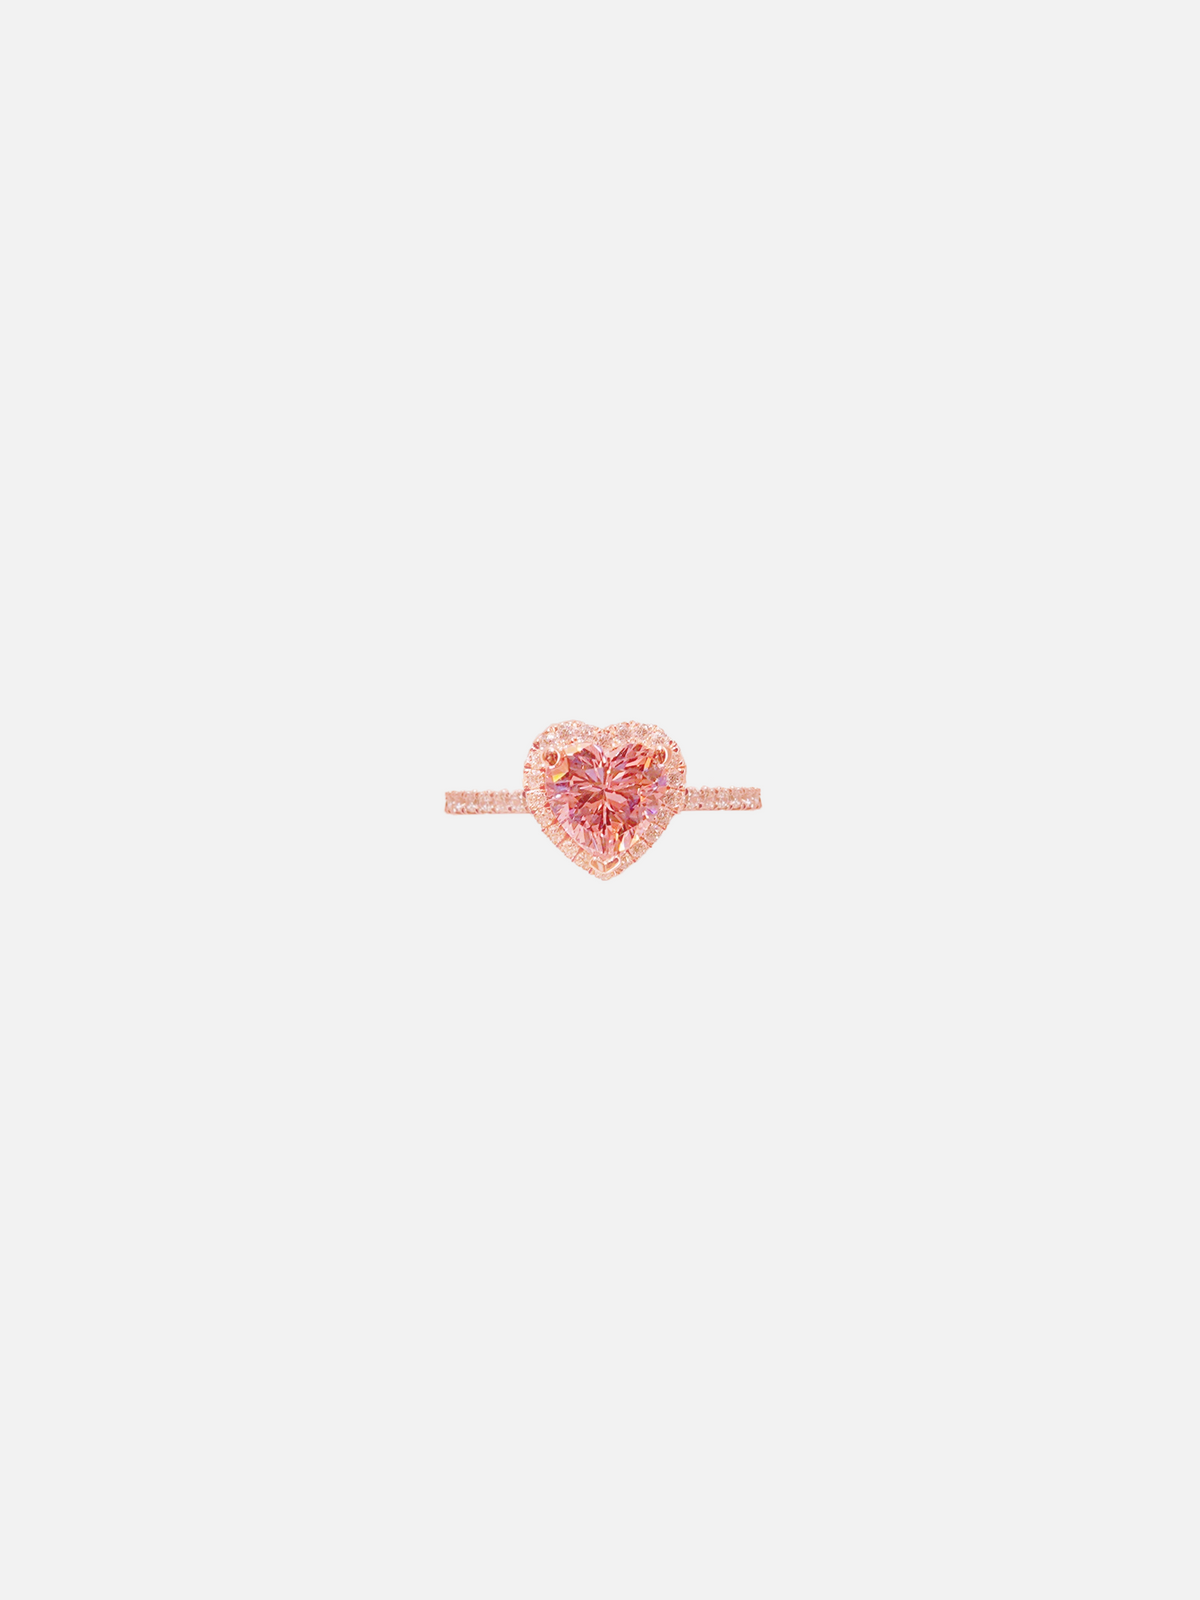 LAFIT· Miracle Heart - Ring  仙氣魔法粉鑽戒指